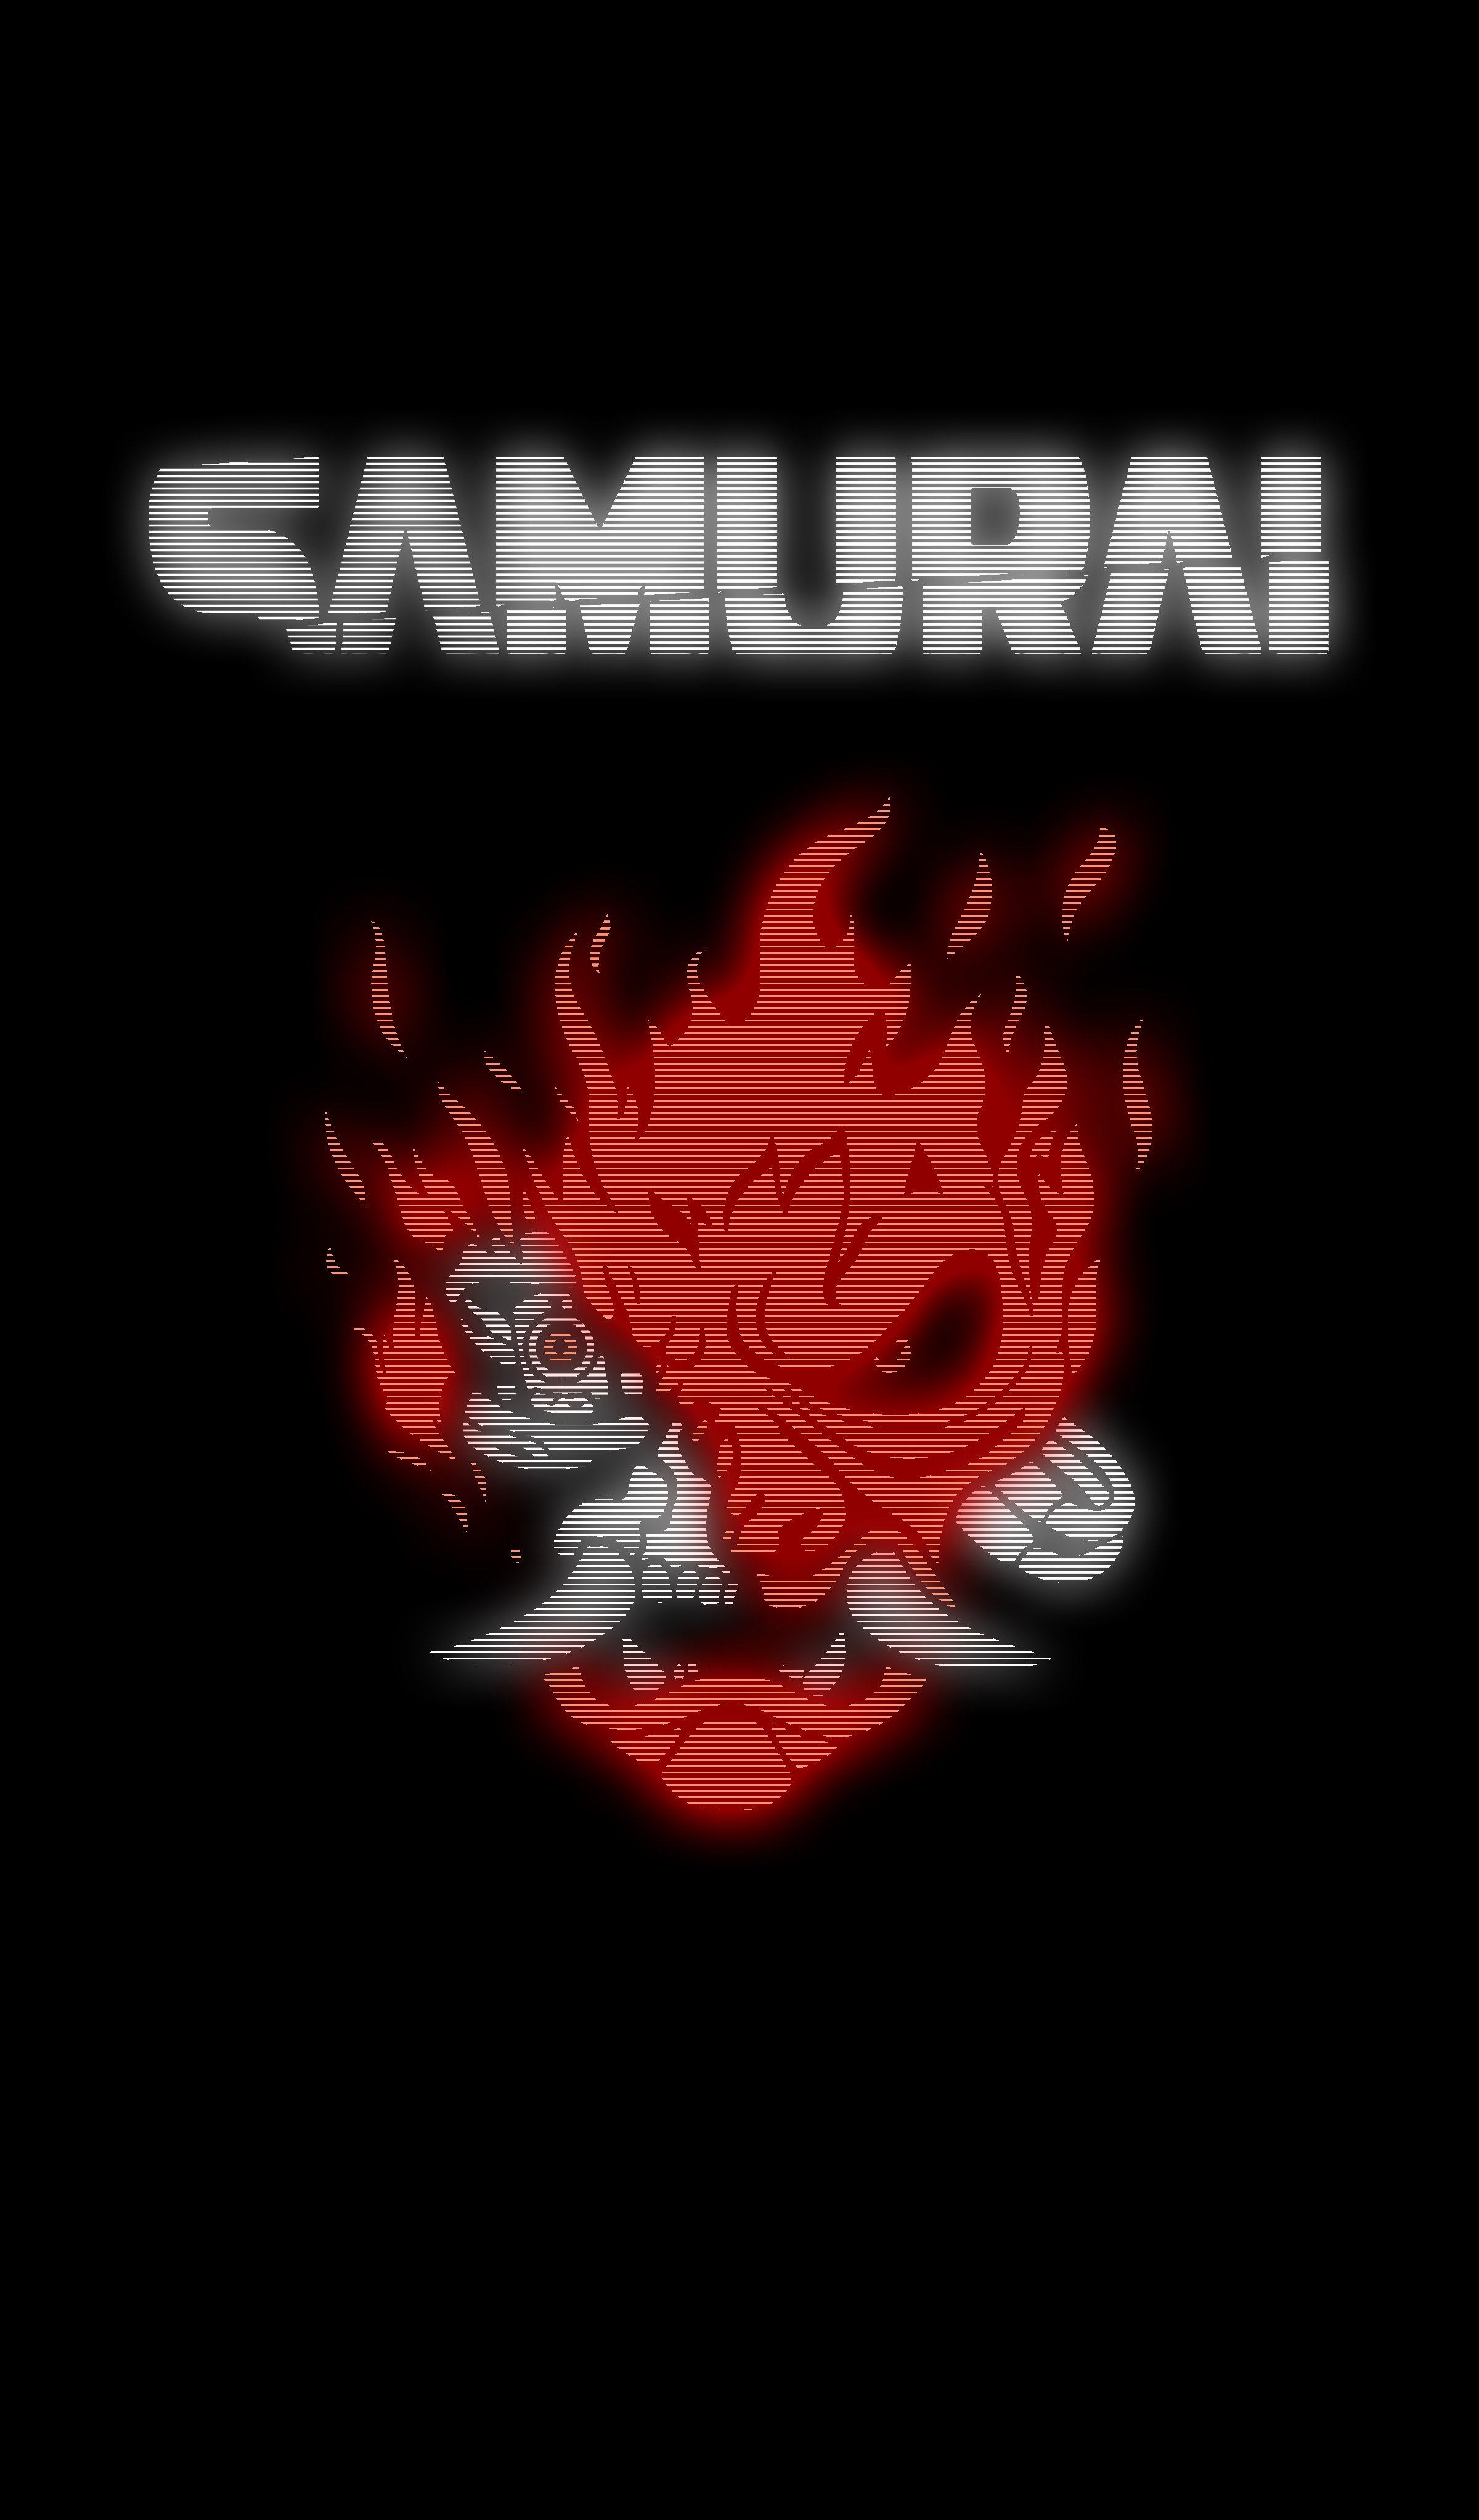 Made some custom Samurai mobile wallpaper. The link to them all